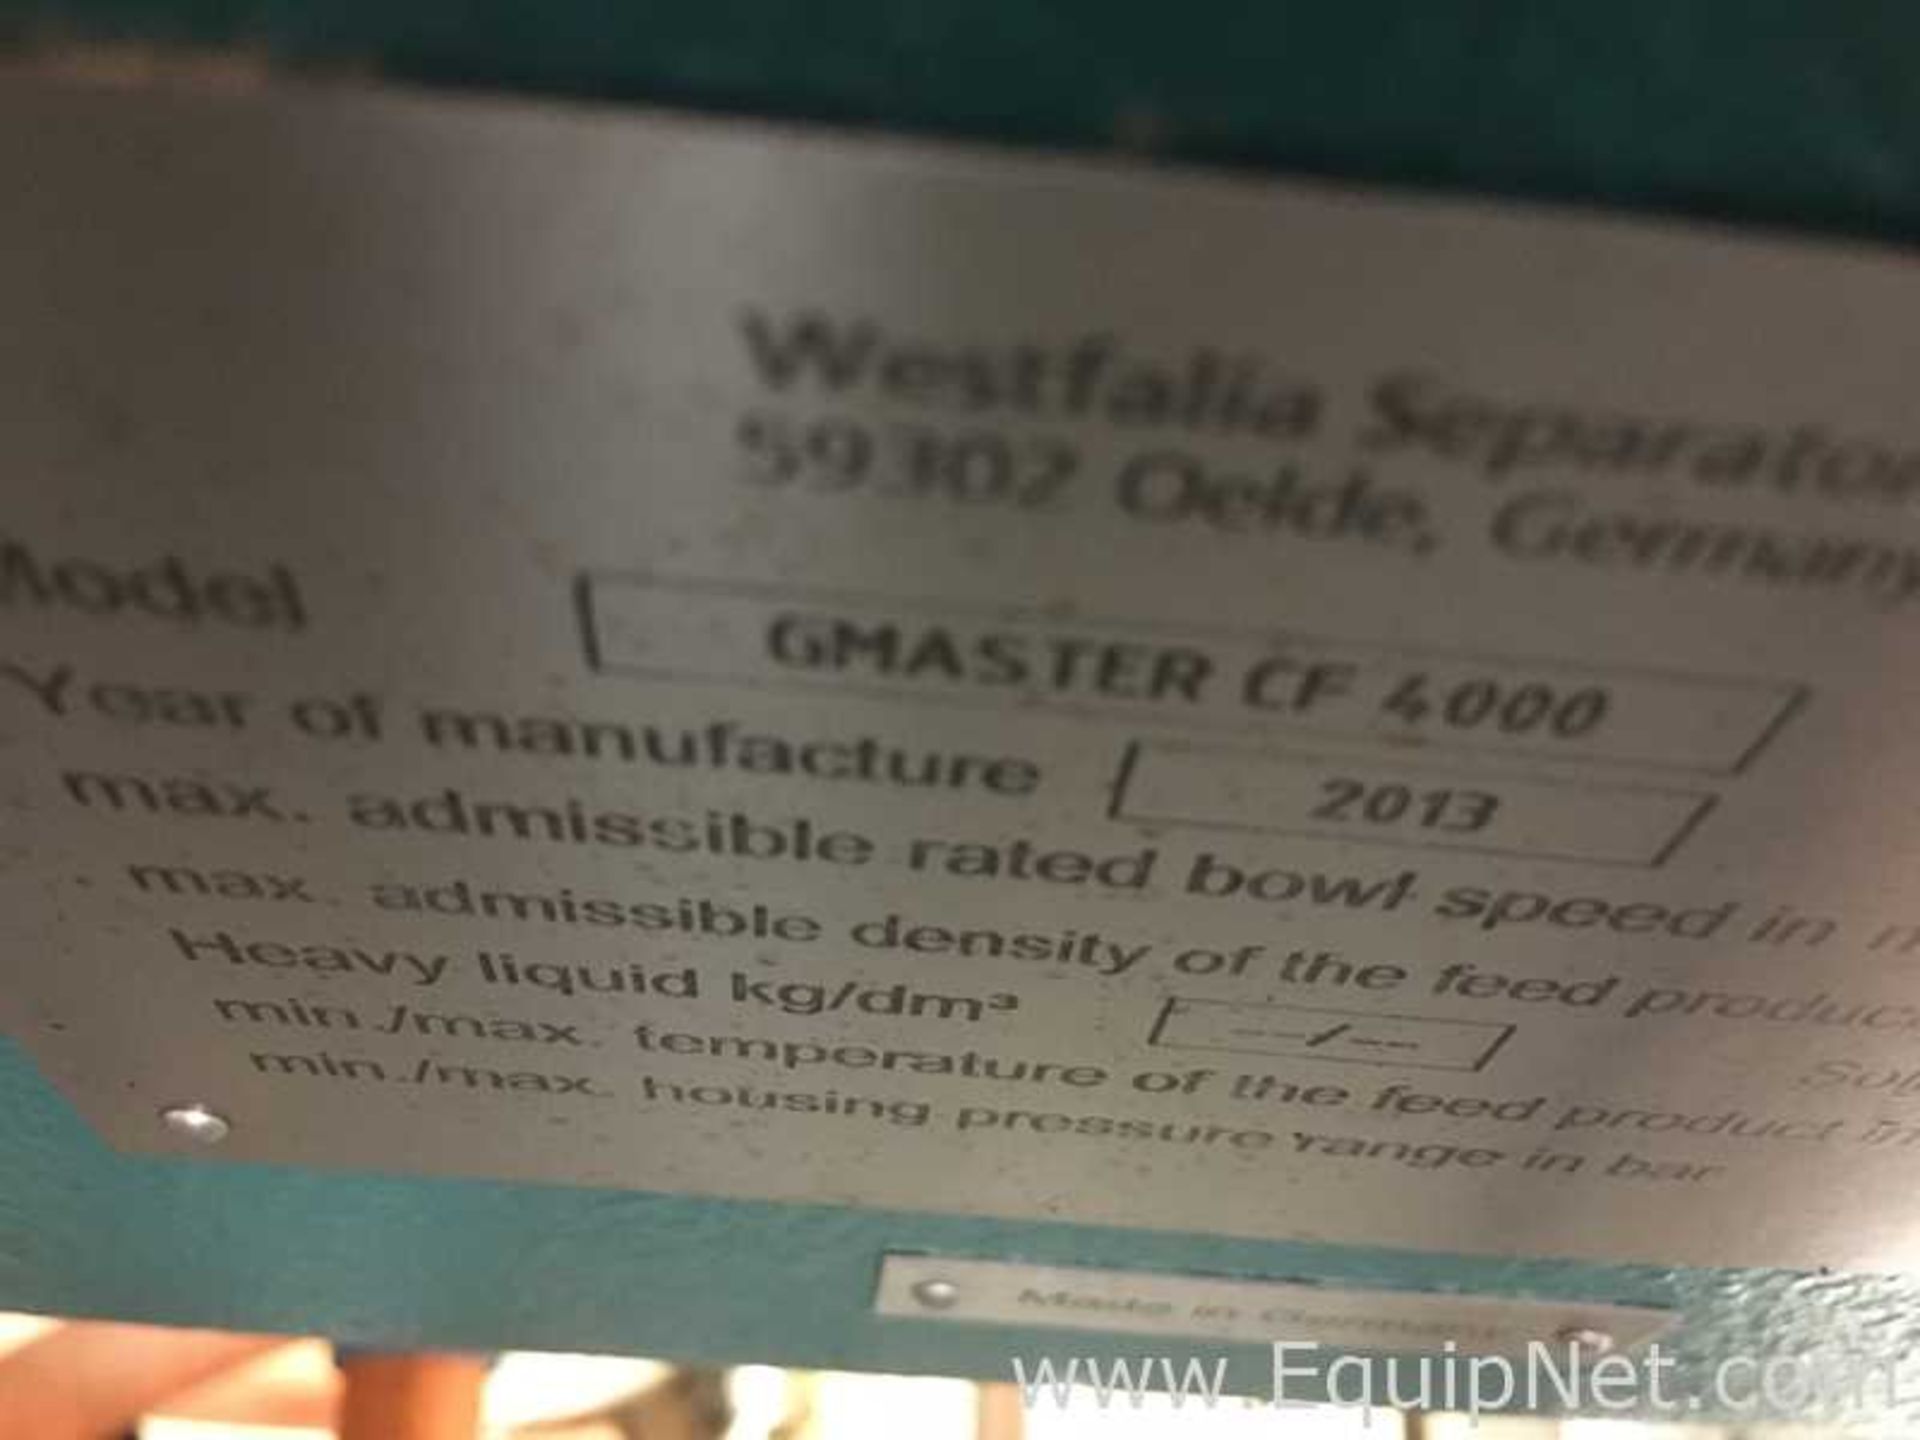 GEA Westfalia Separator Group GMASTER CF 4000 Stainless Steel Decanter Centrifuge - Image 21 of 44